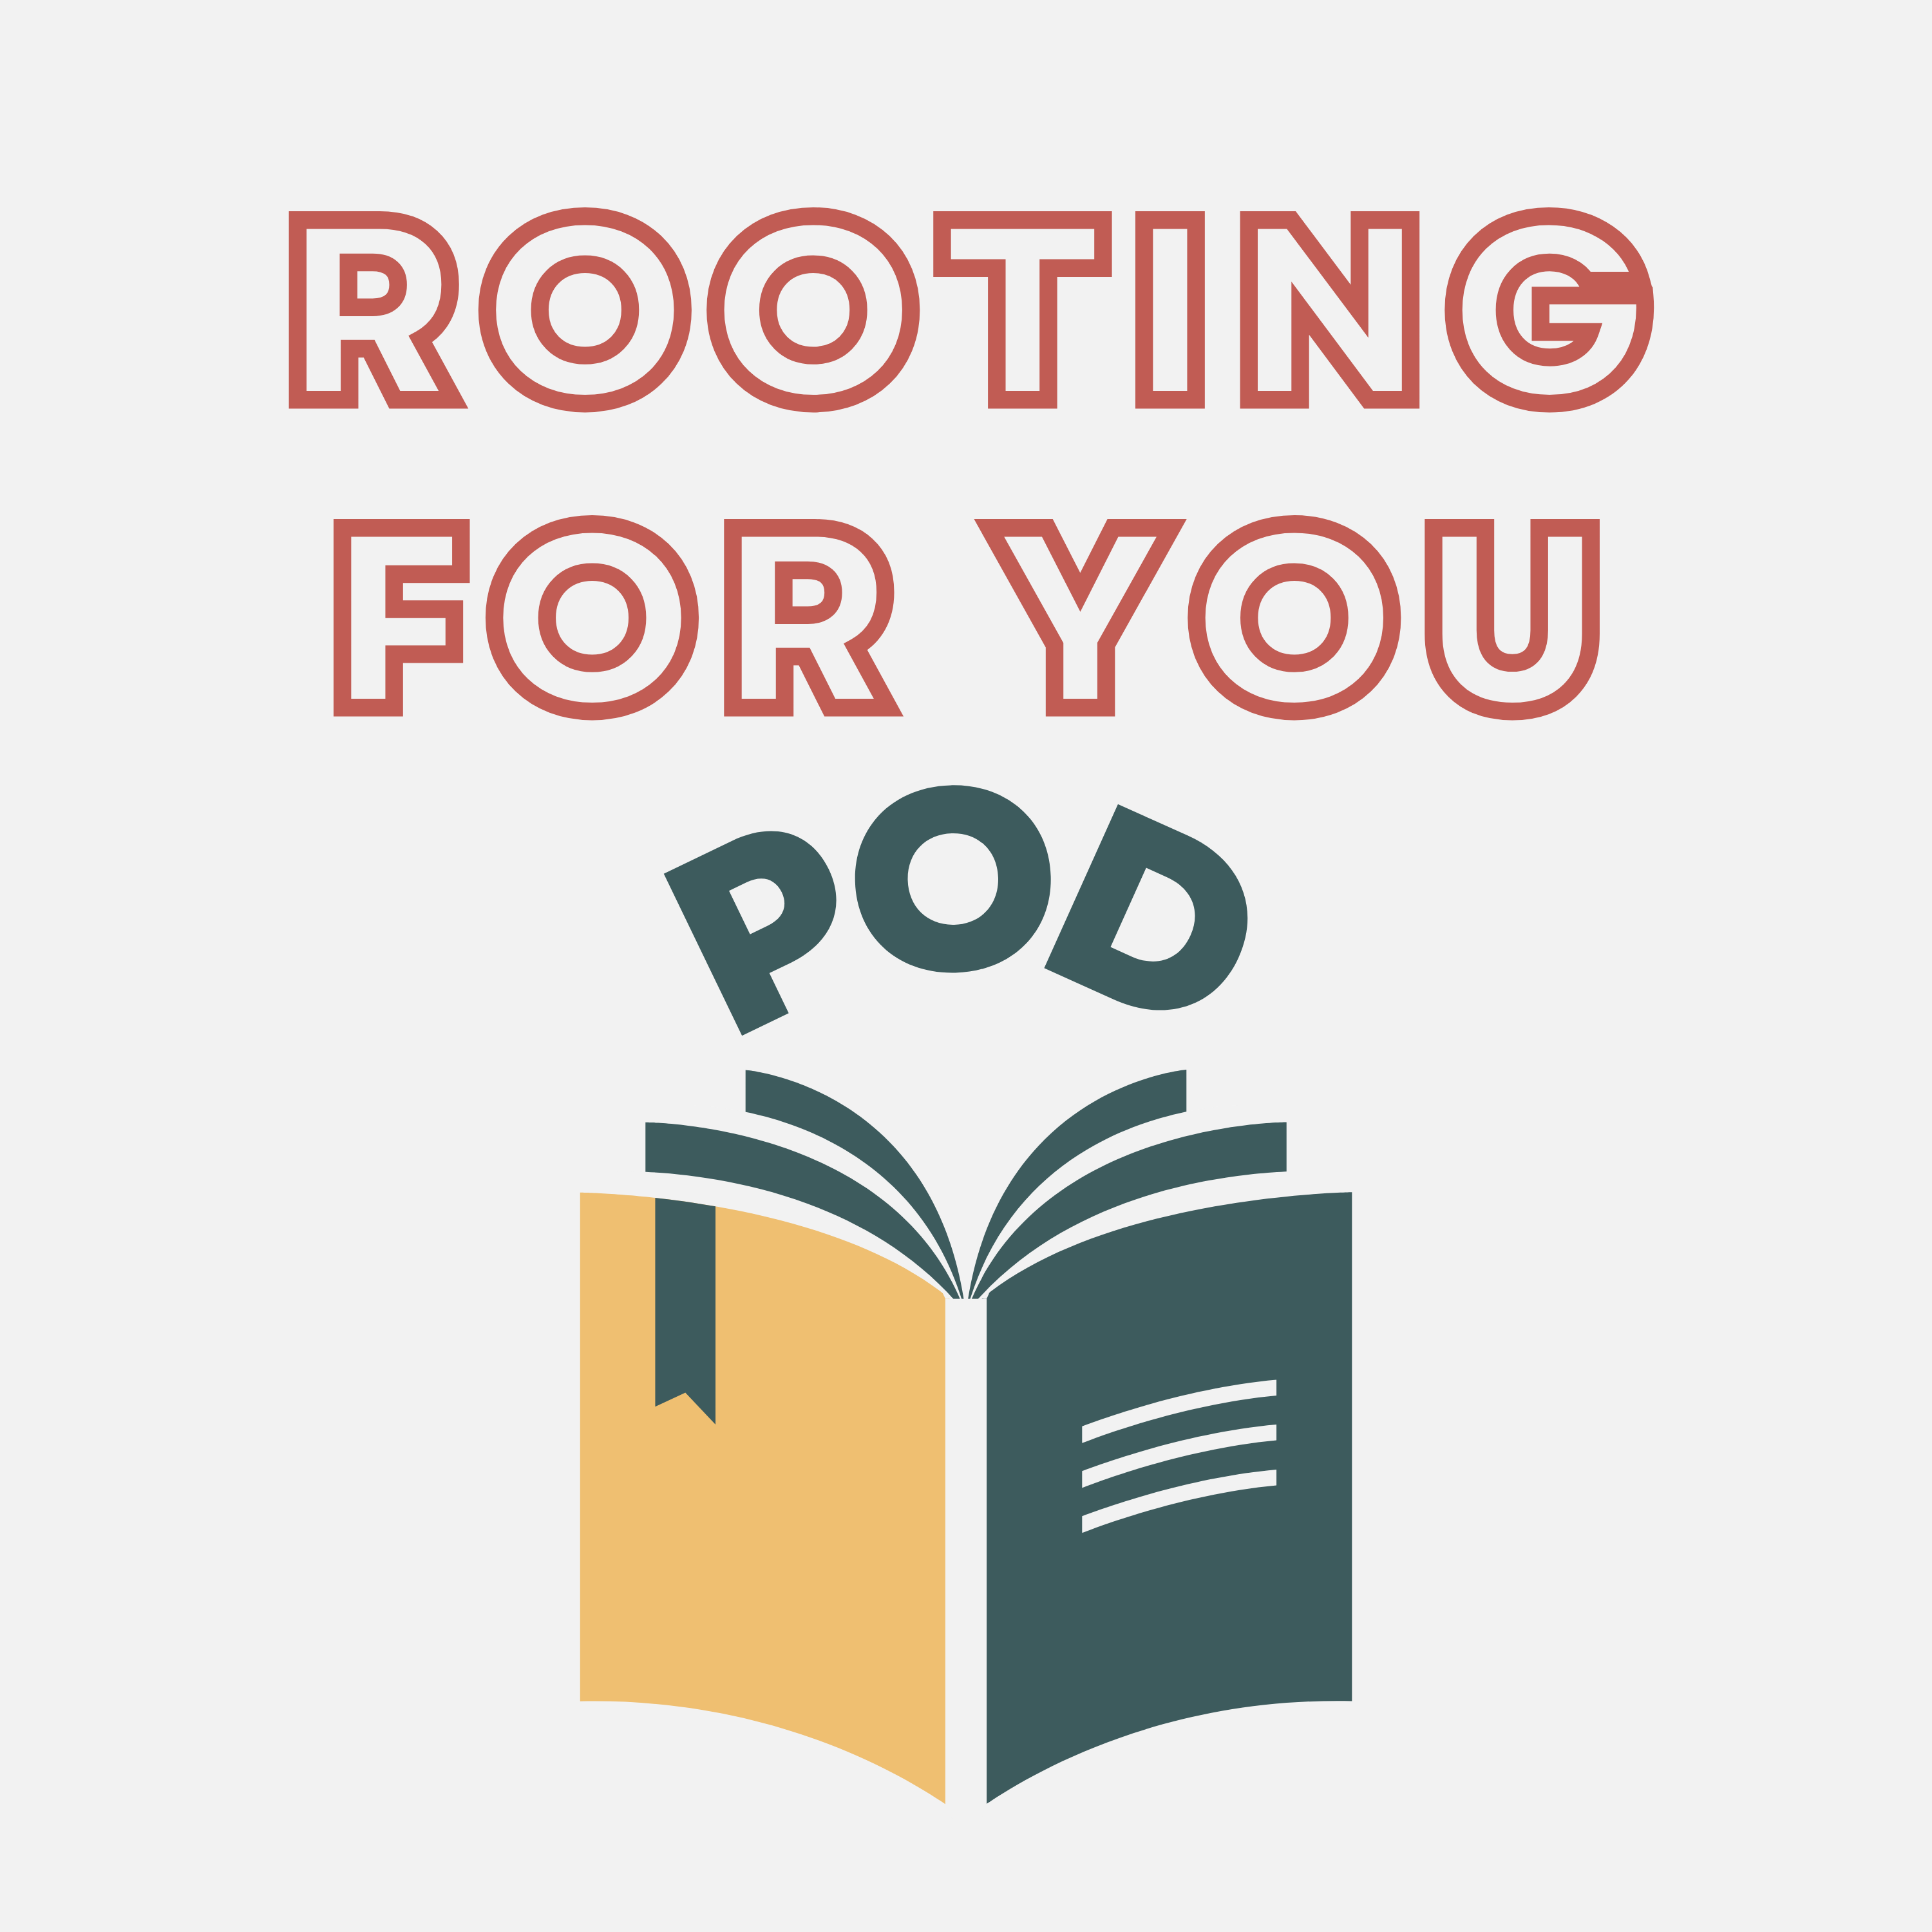 Rooting for u pod - twitter logo